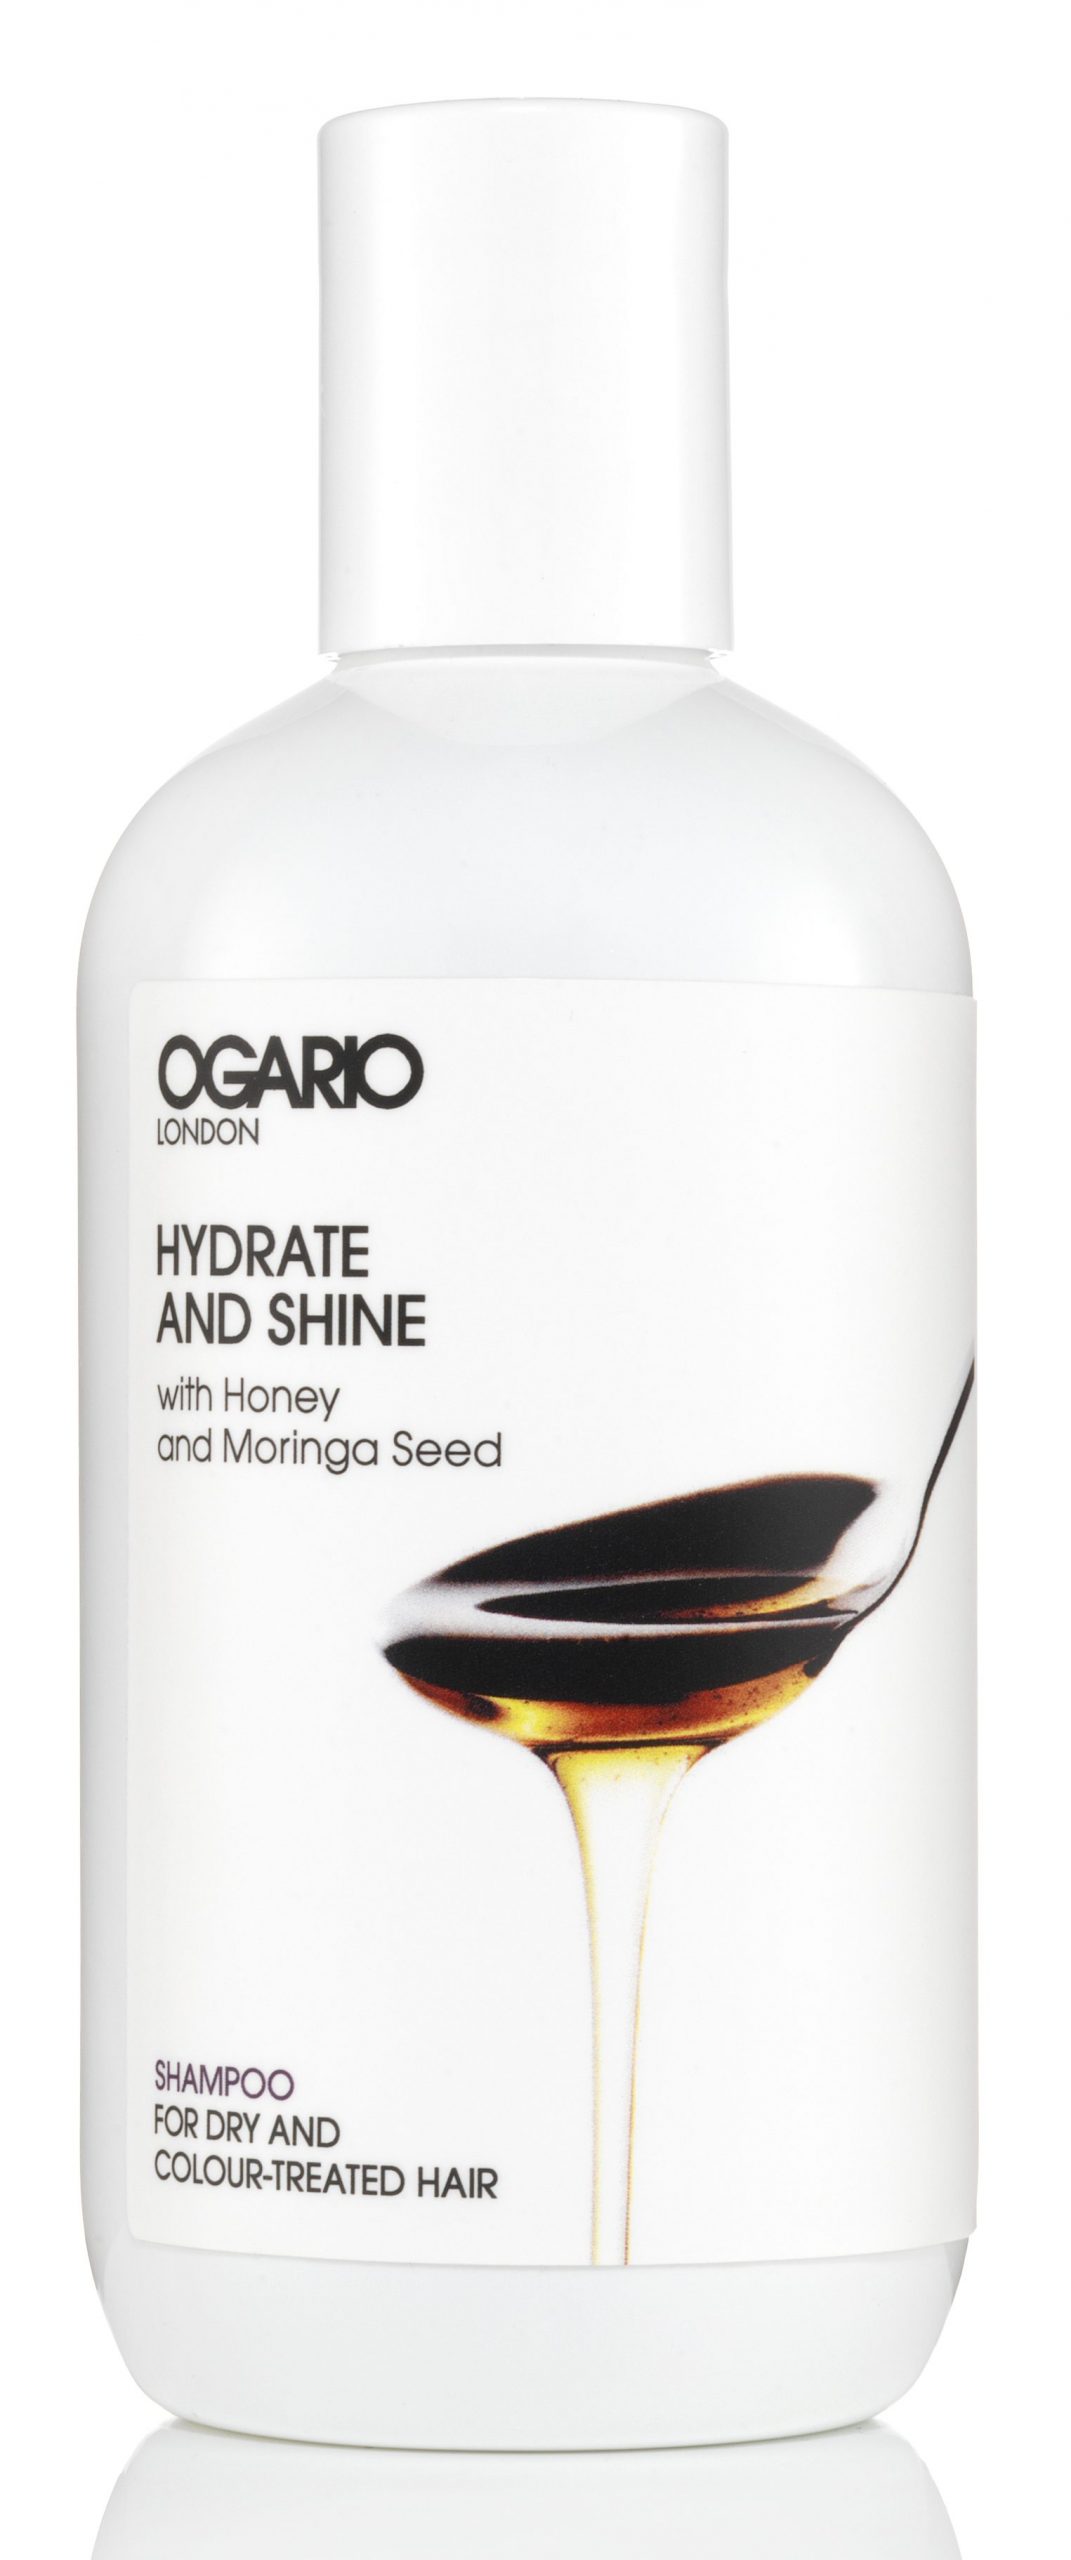 bottle of ogario hydrate and shine shampoo on white background